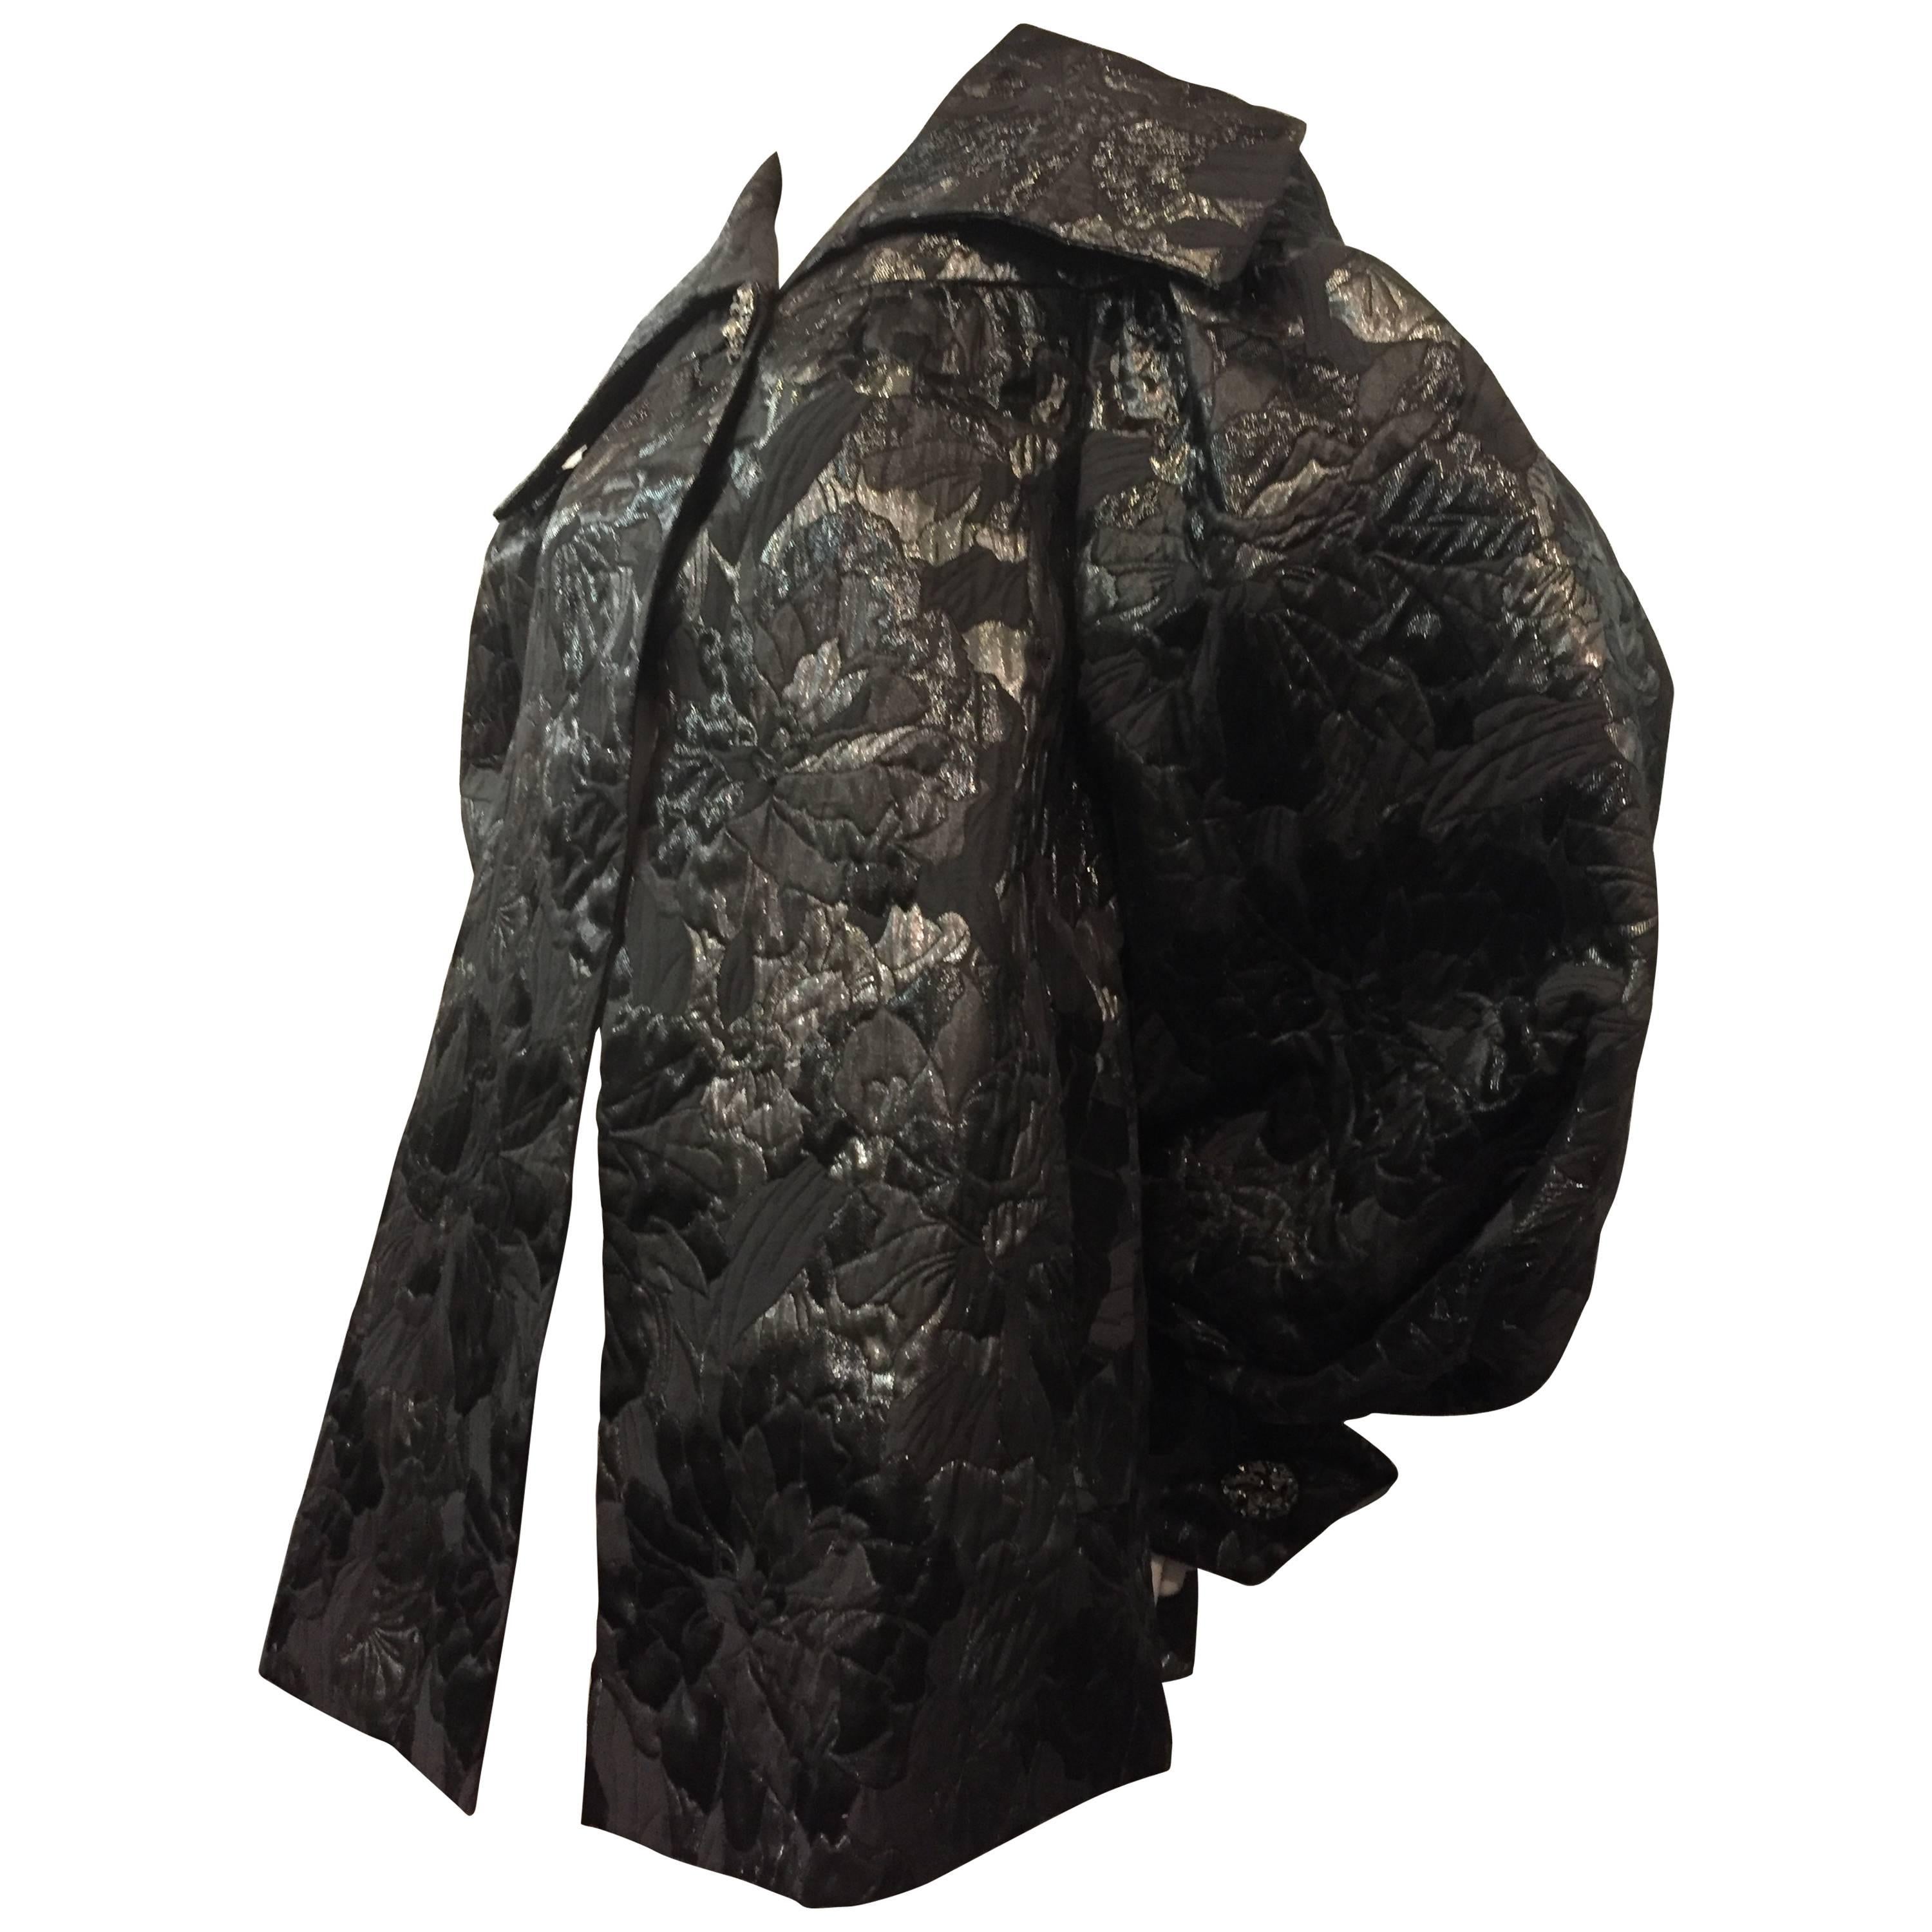 1980s Paul-Louis Orrier 1950s-Inspired Black and Gunmetal Brocade Swing Coat